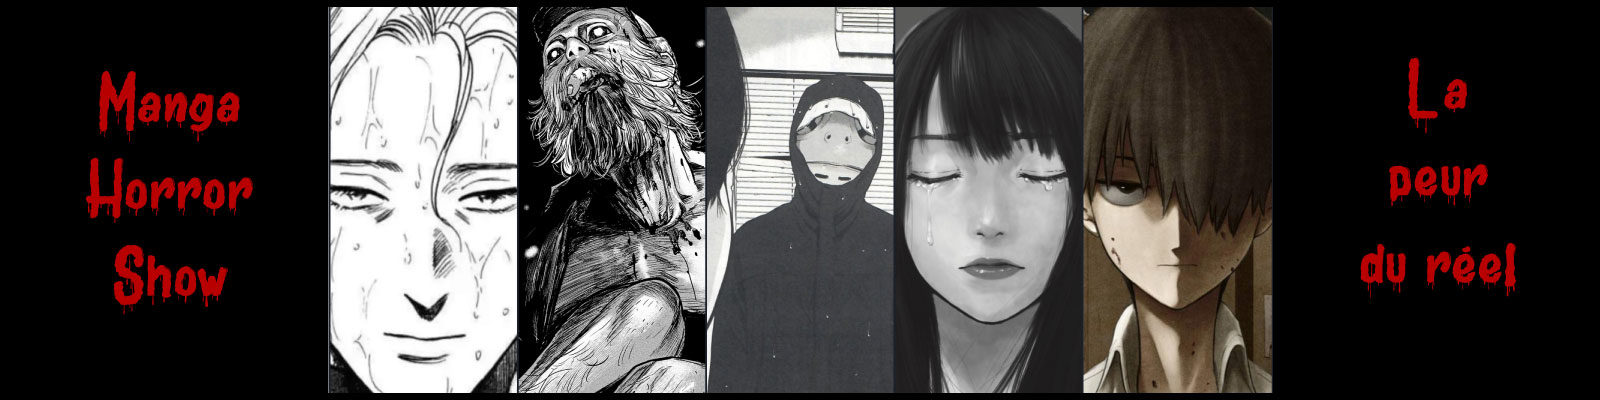 Manga Horror Show---Monstres.png-2-2 2